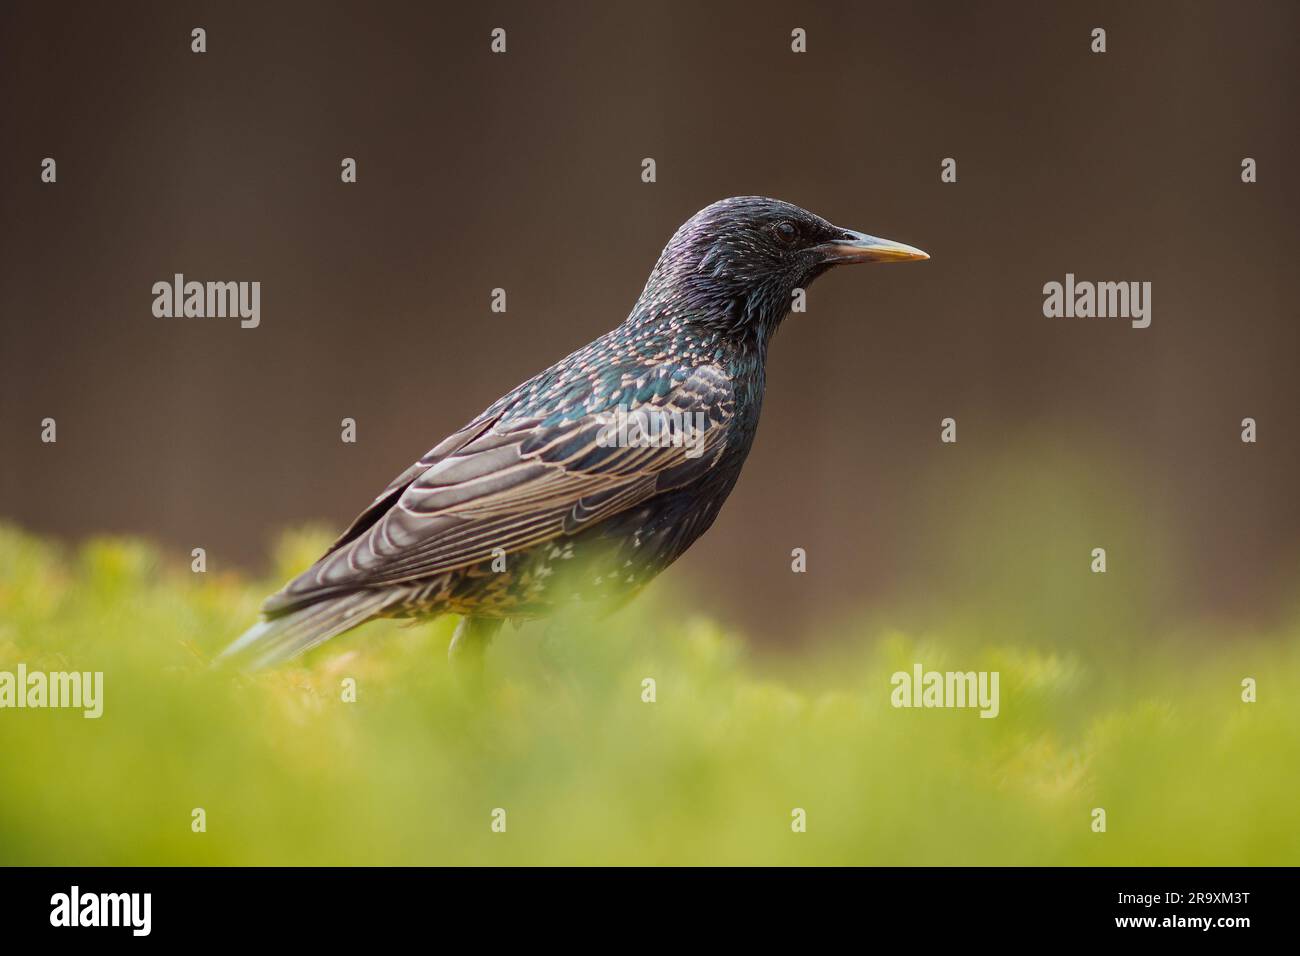 European male starling bird portrait on green Stock Photo